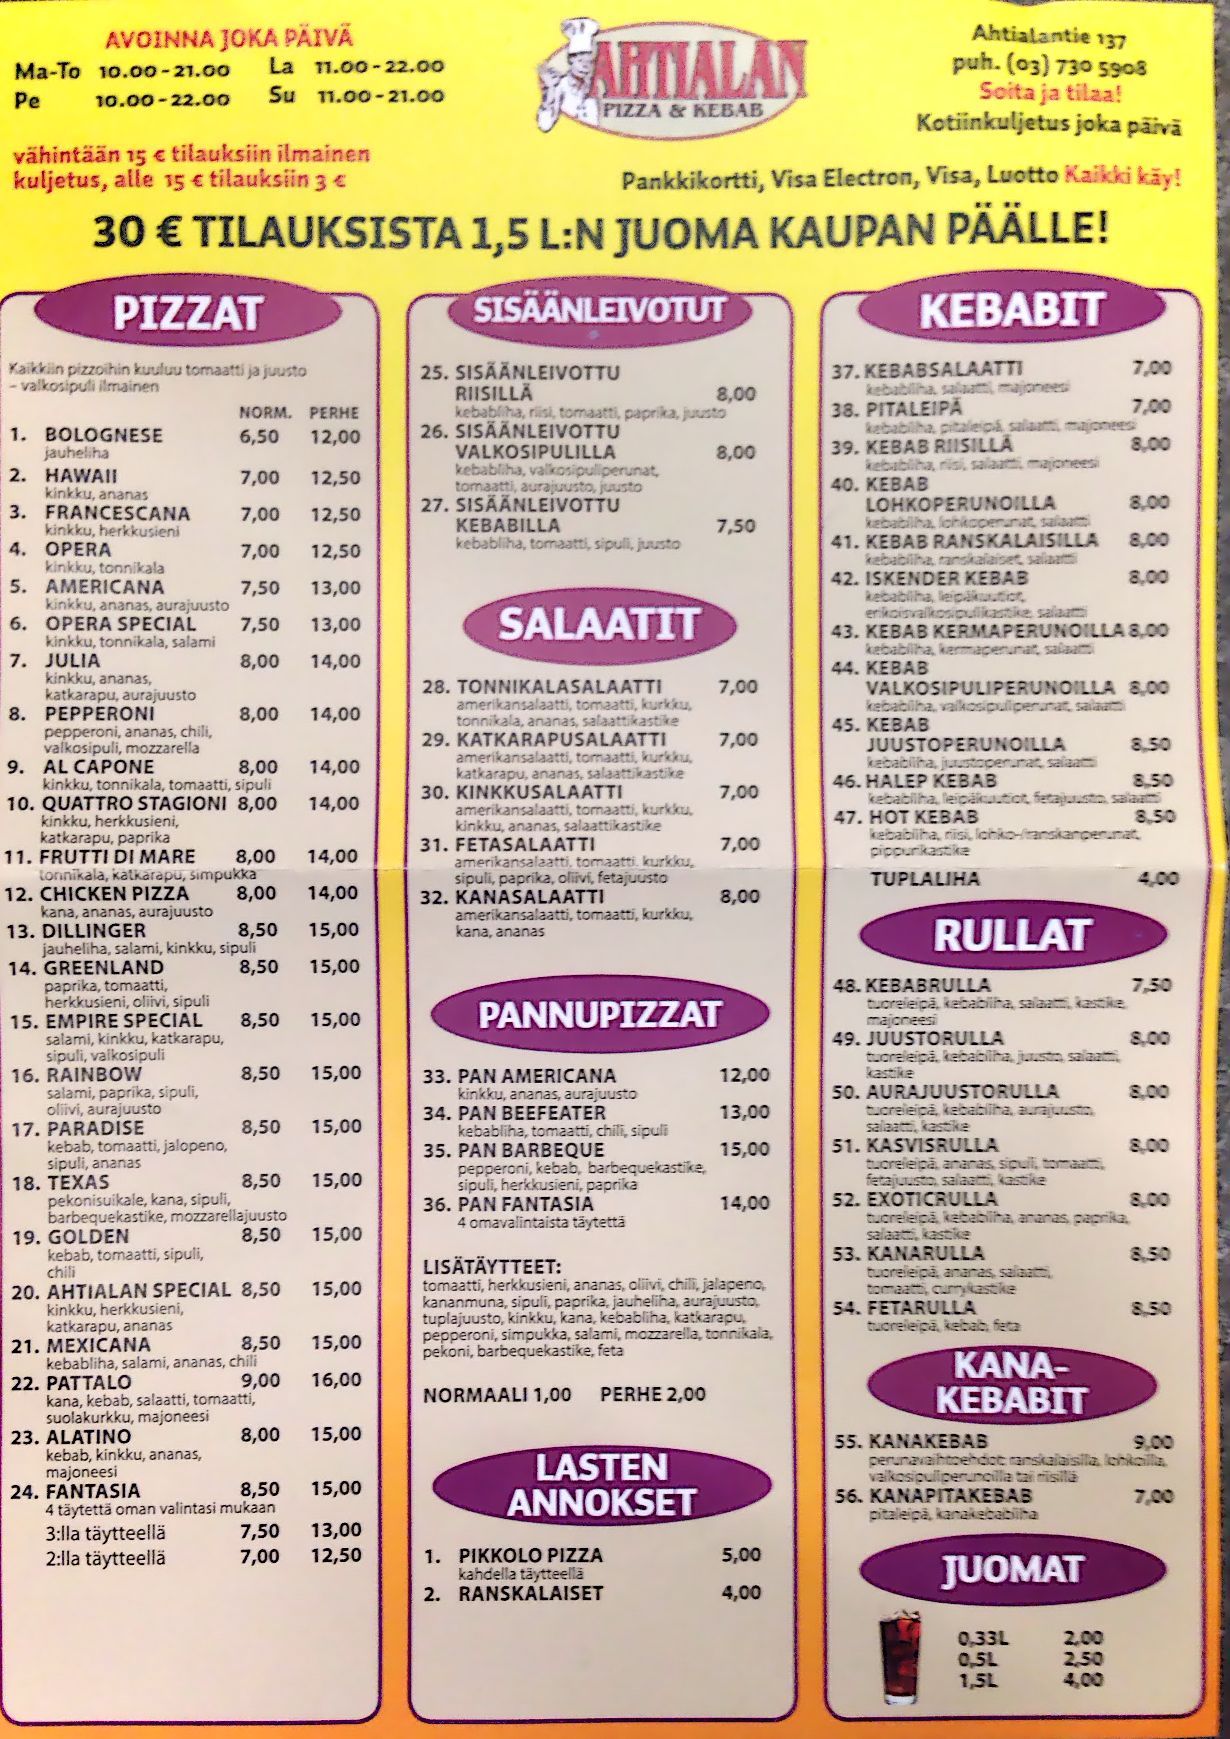 Ahtialan Pizza-Kebab